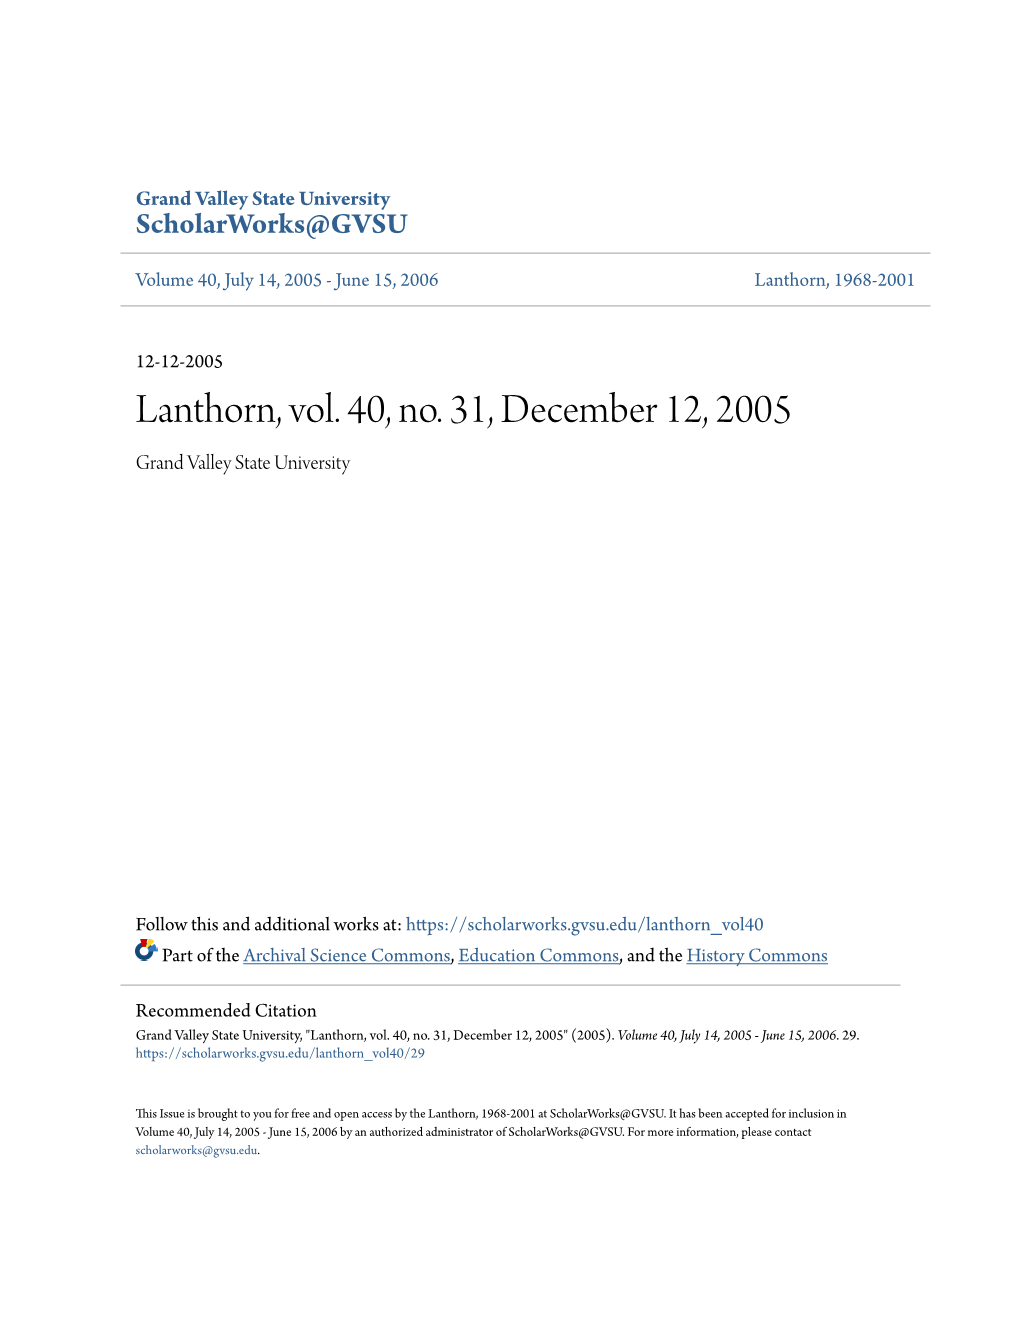 Lanthorn, Vol. 40, No. 31, December 12, 2005 Grand Valley State University